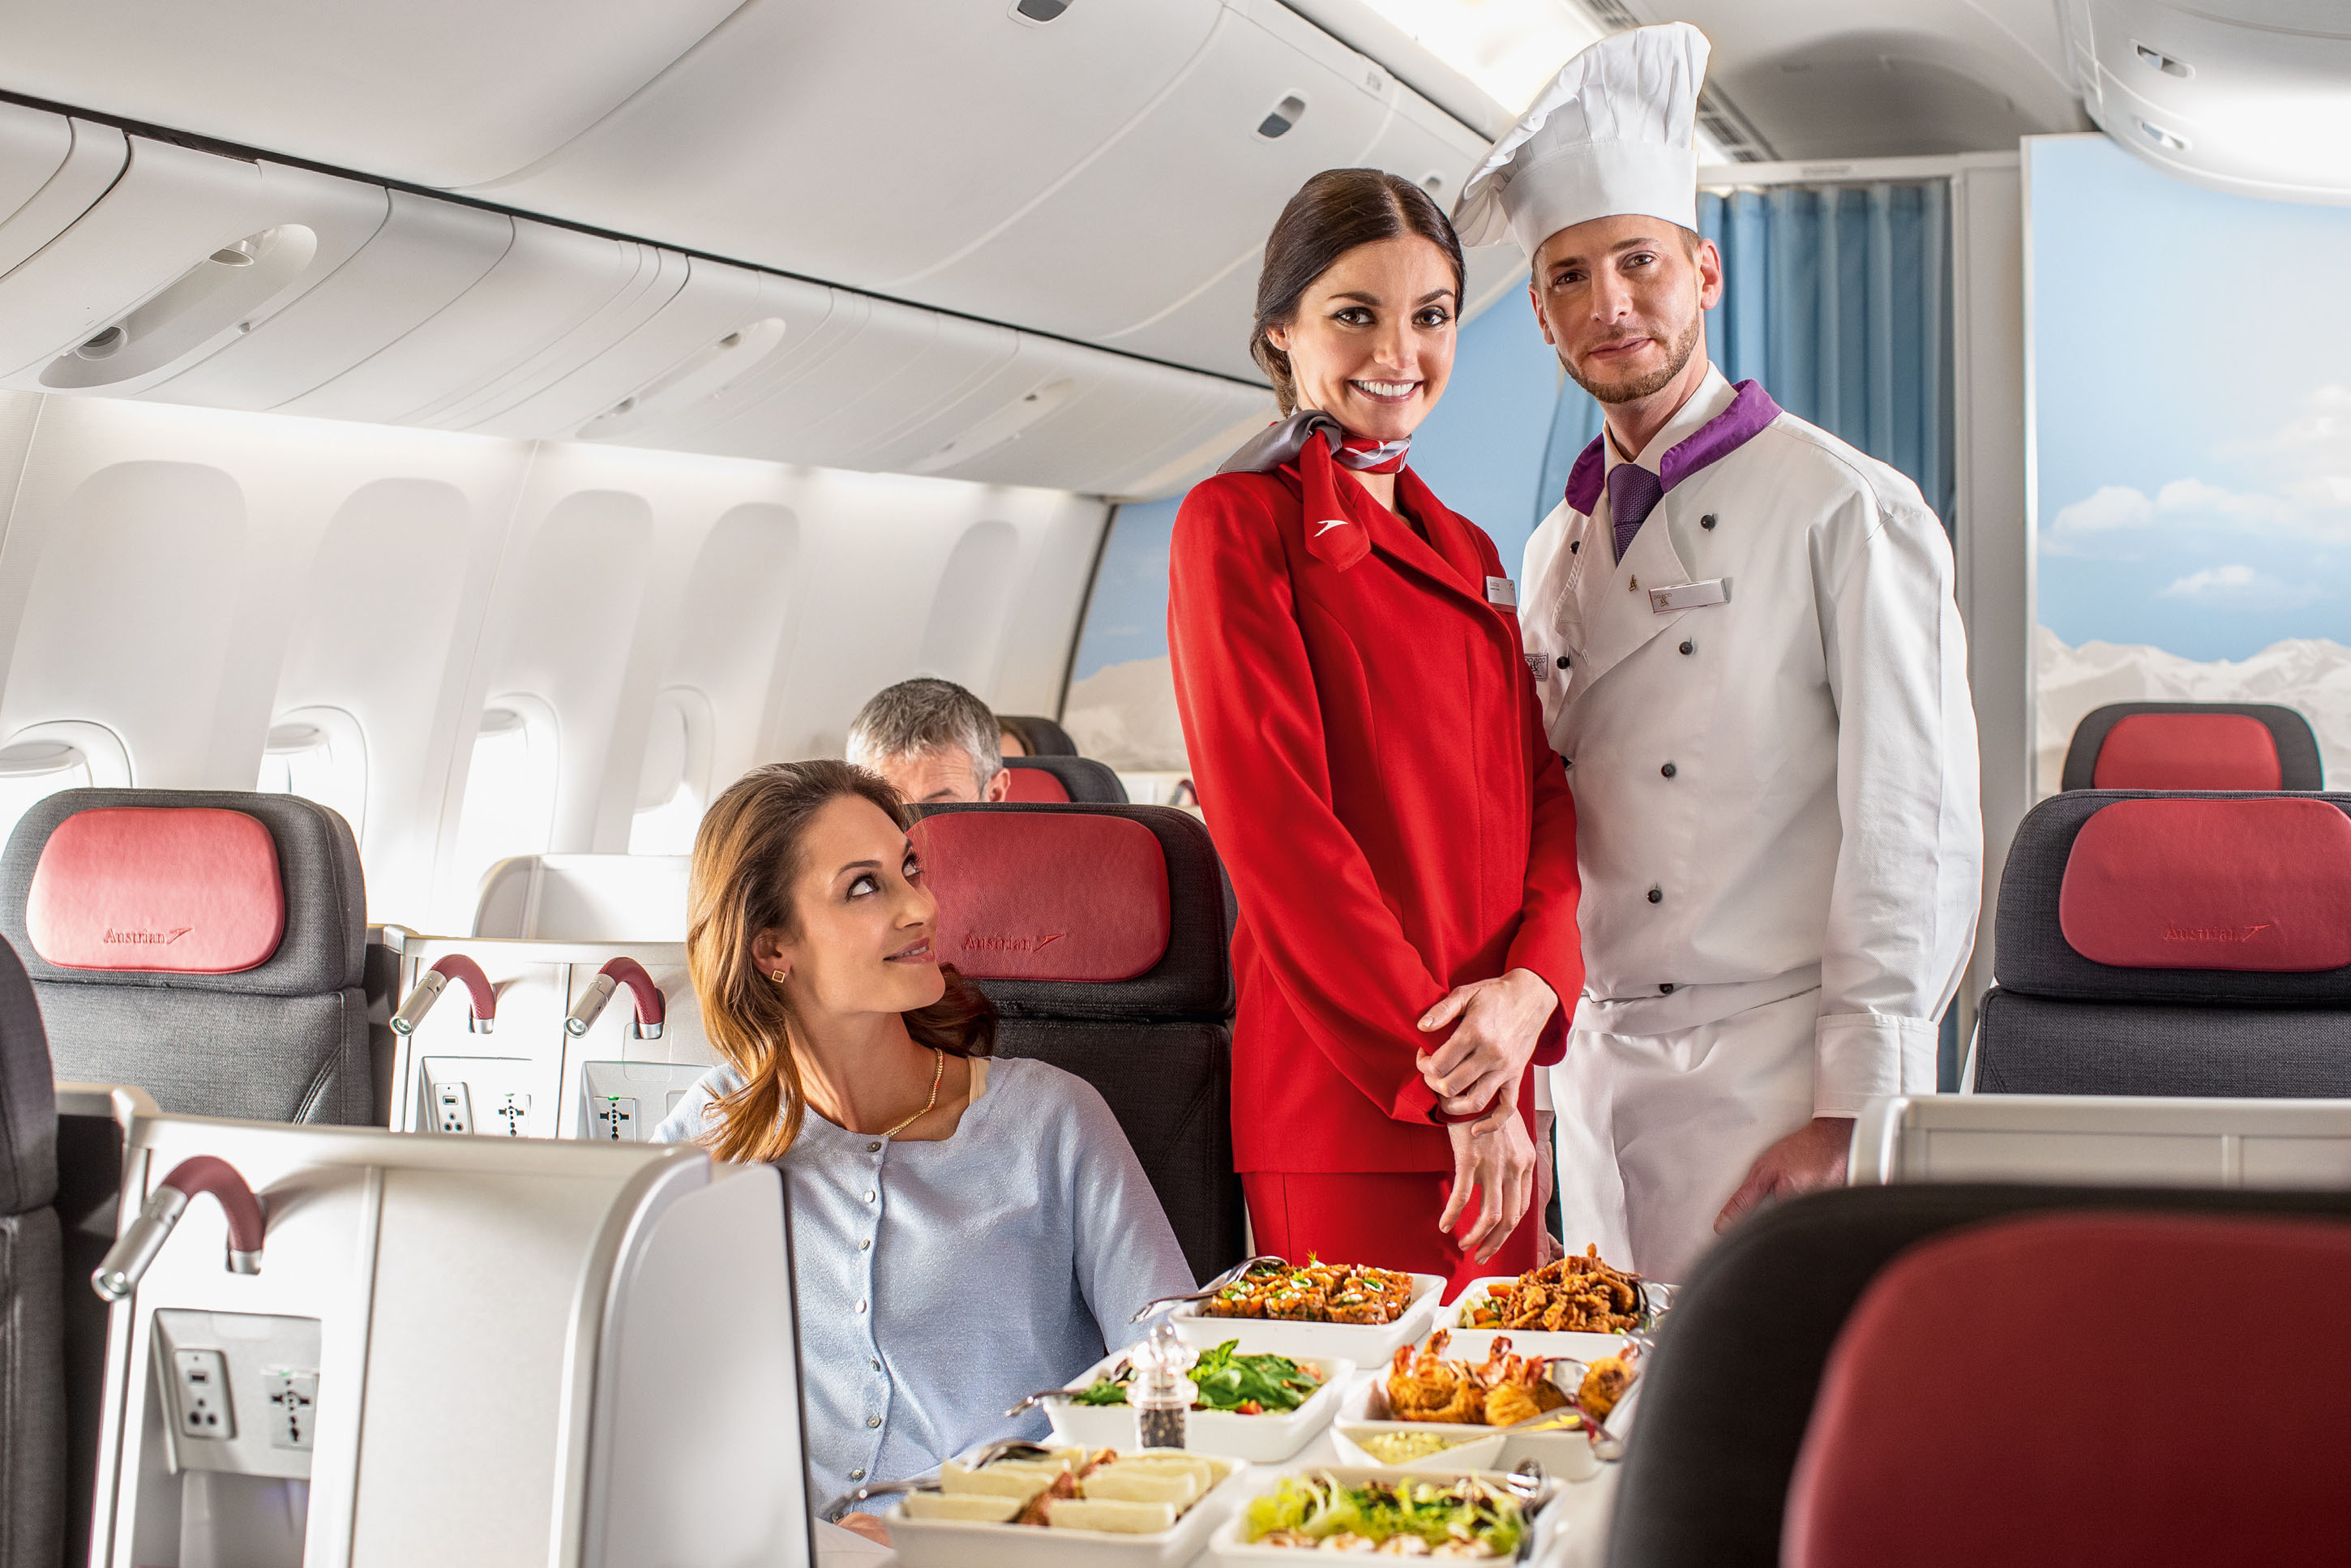 Обслуживание пассажиров на транспорте. Еда в самолете. Стюардесса с едой. Еда на борту. Борт самолета.